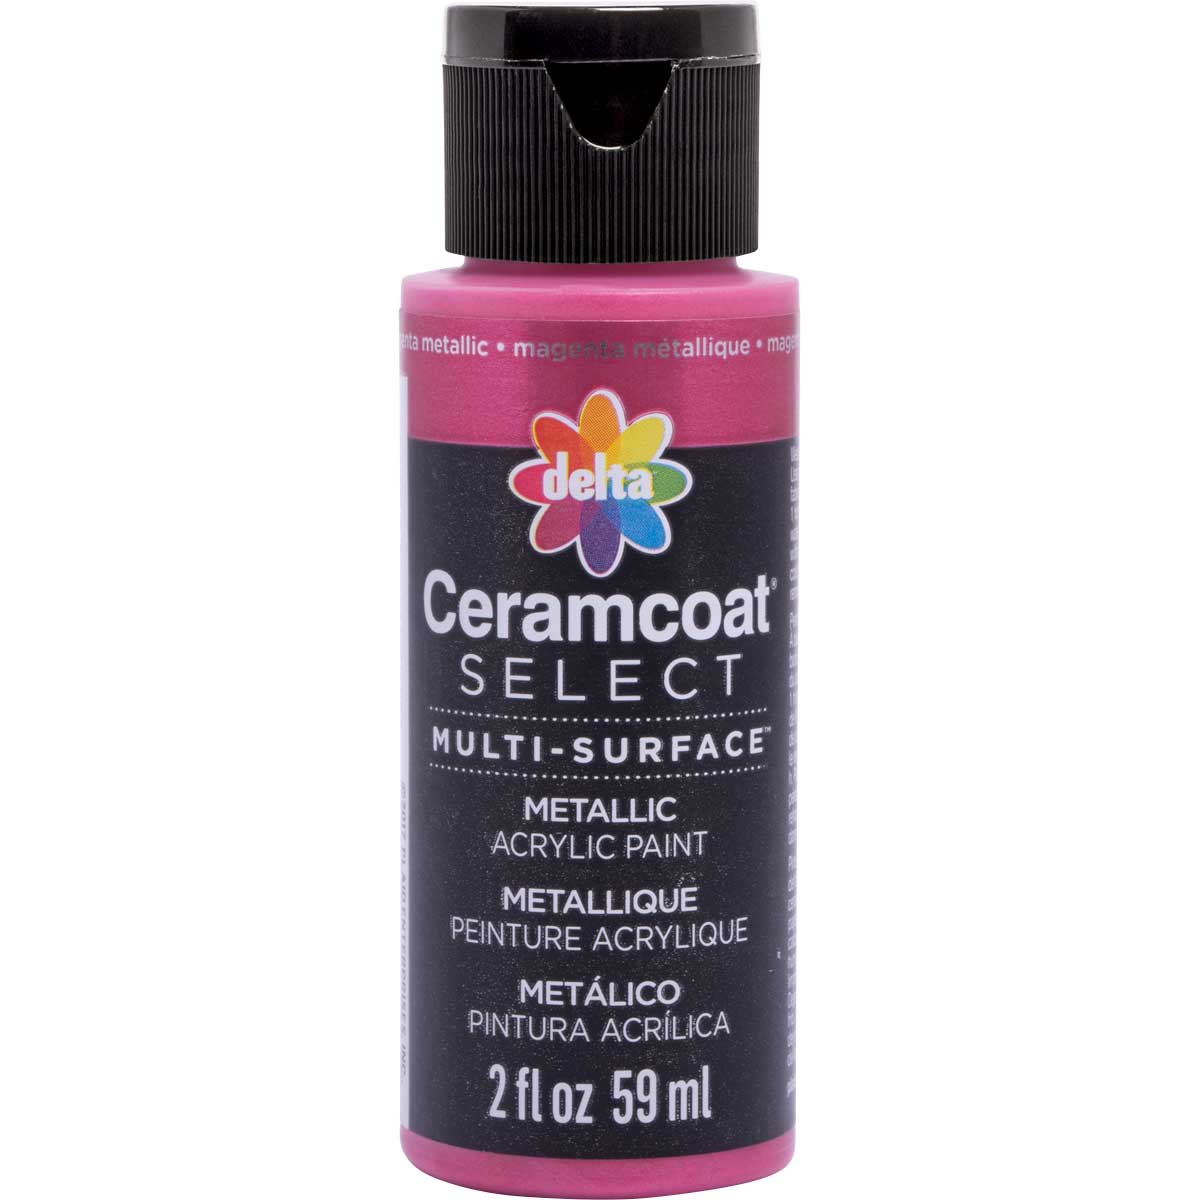 Delta Ceramcoat ® Select Multi-Surface Acrylic Paint - Metallic - Magenta, 2 oz. - 04101